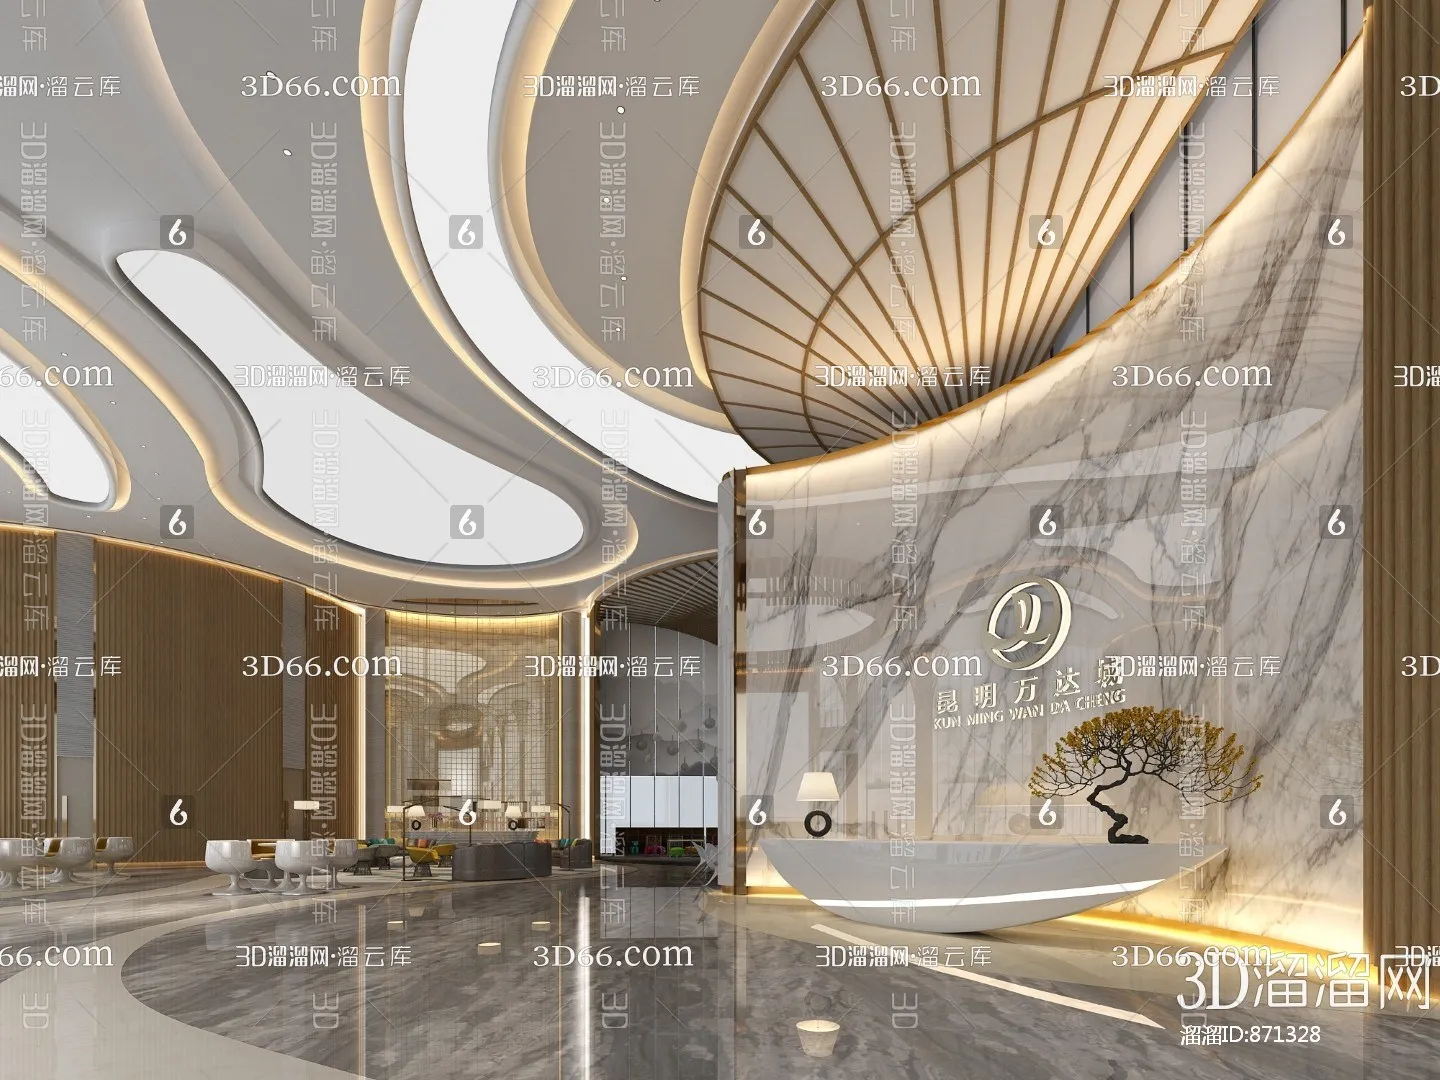 Hotel Lobby 3D Scenes – 0529